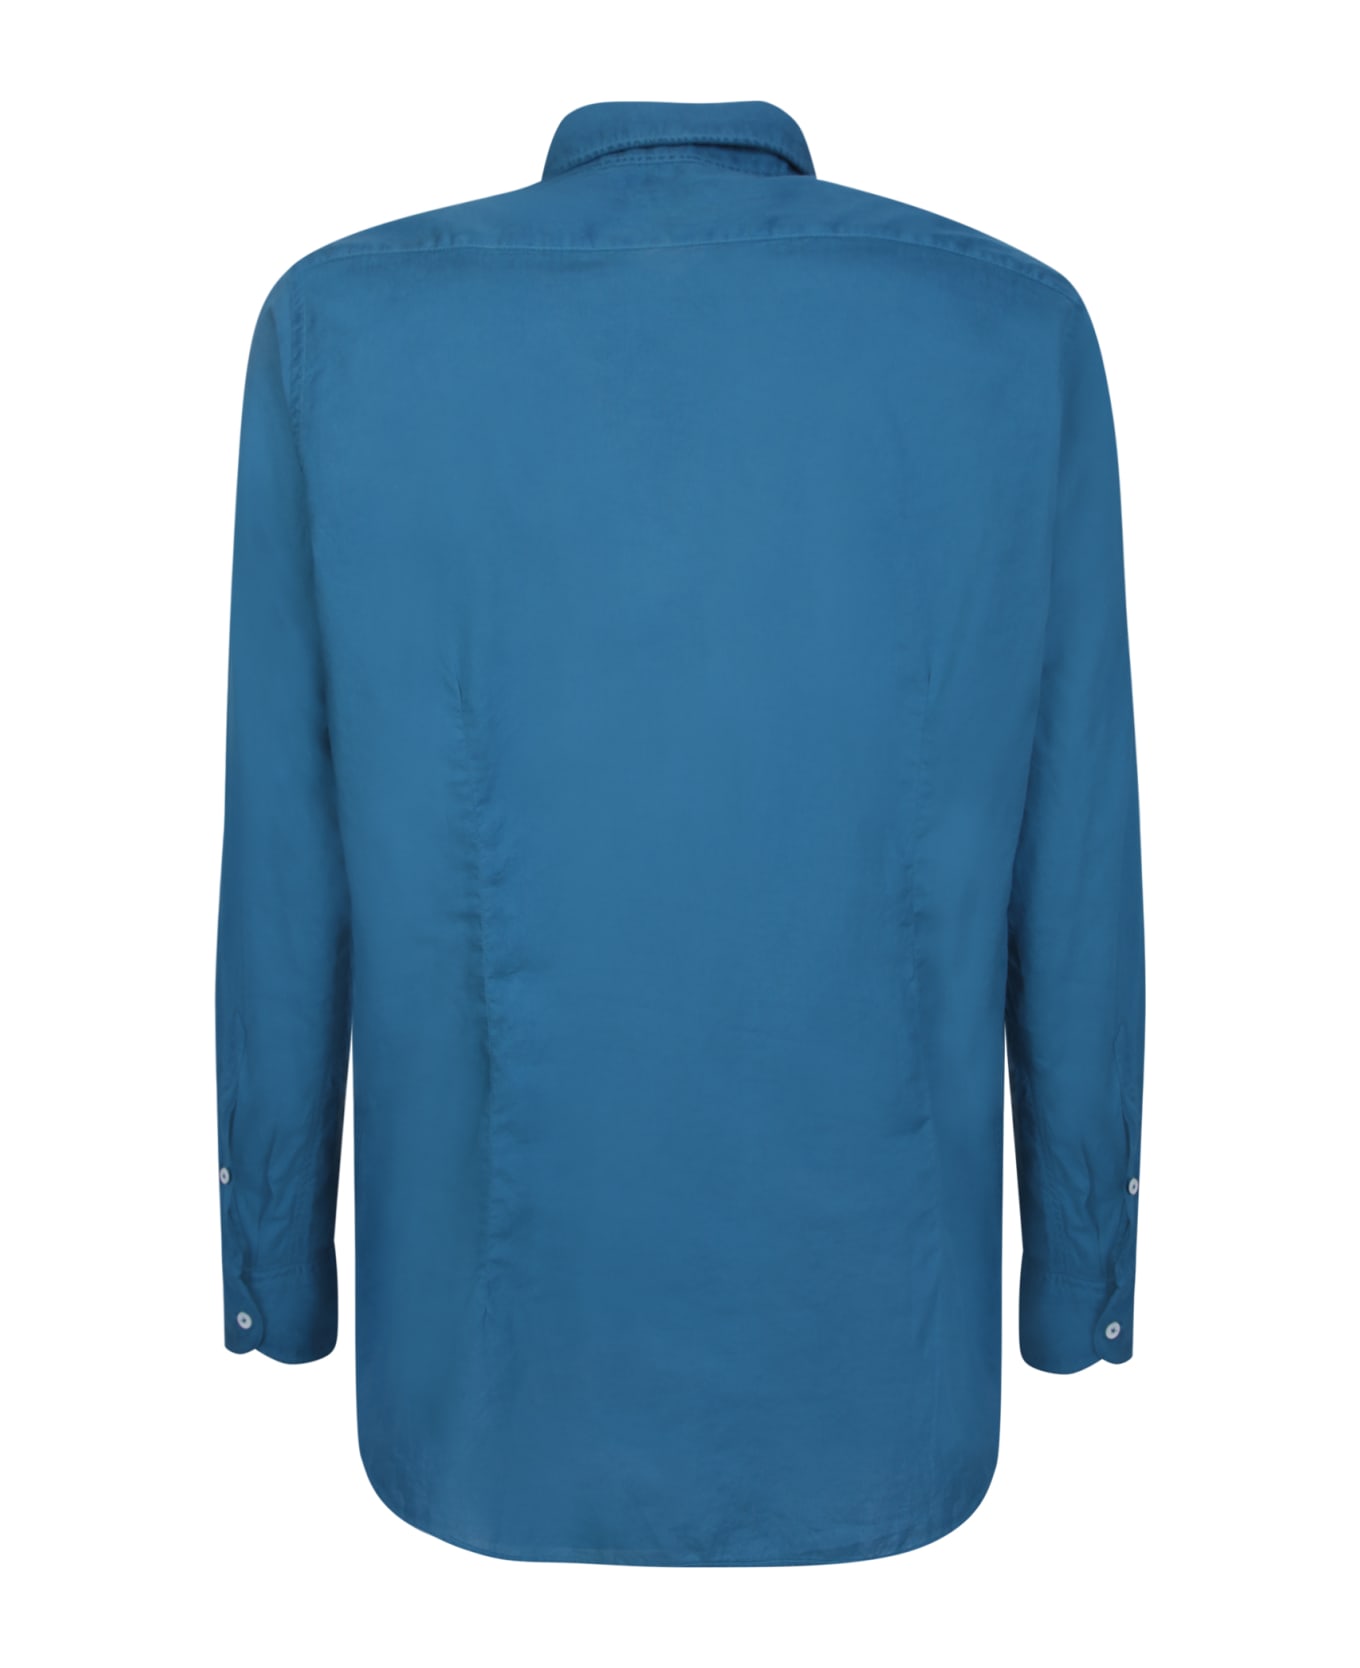 Lardini Teal Long-sleeved Shirt - Blue シャツ